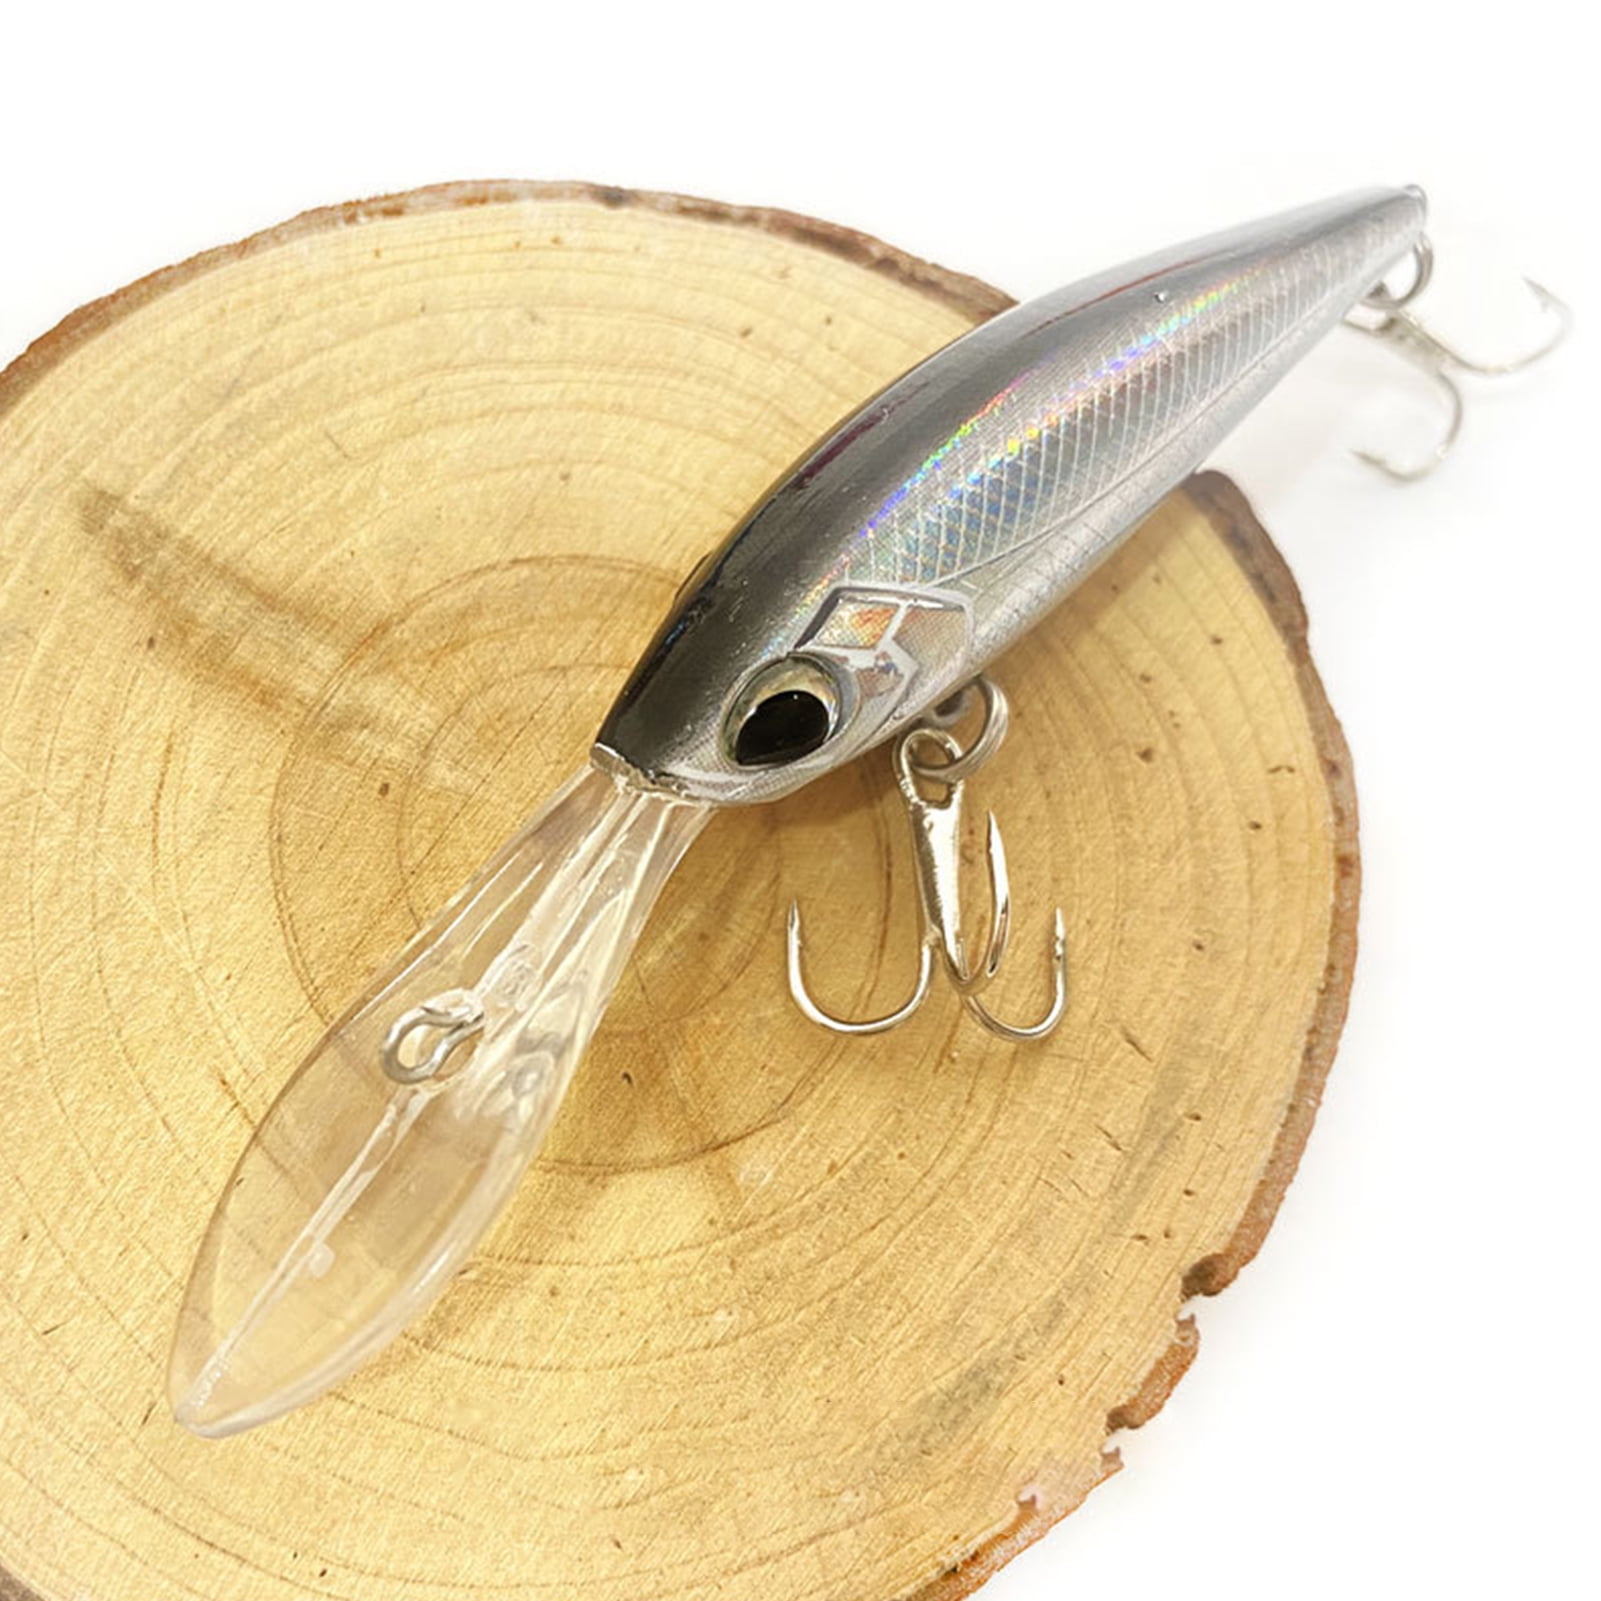 UDIYO 6cm/6.2g Hard Bait 3D Fish Eyes with Sharp-Hook Long Tongue